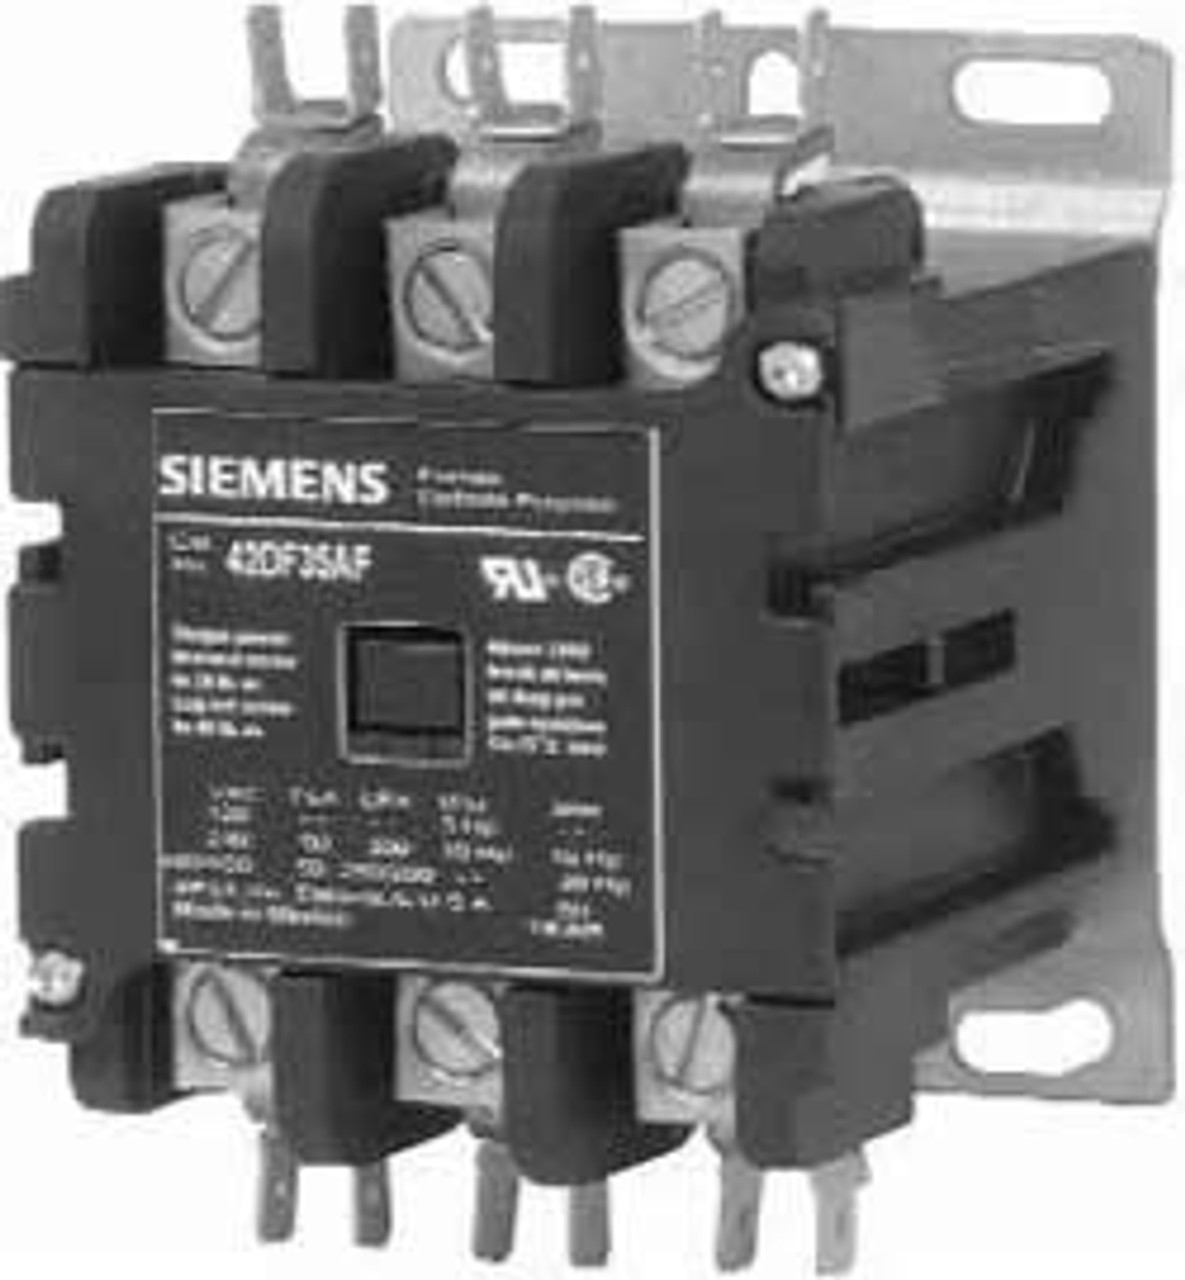 Siemens/Furnas 42DF15AH contactor